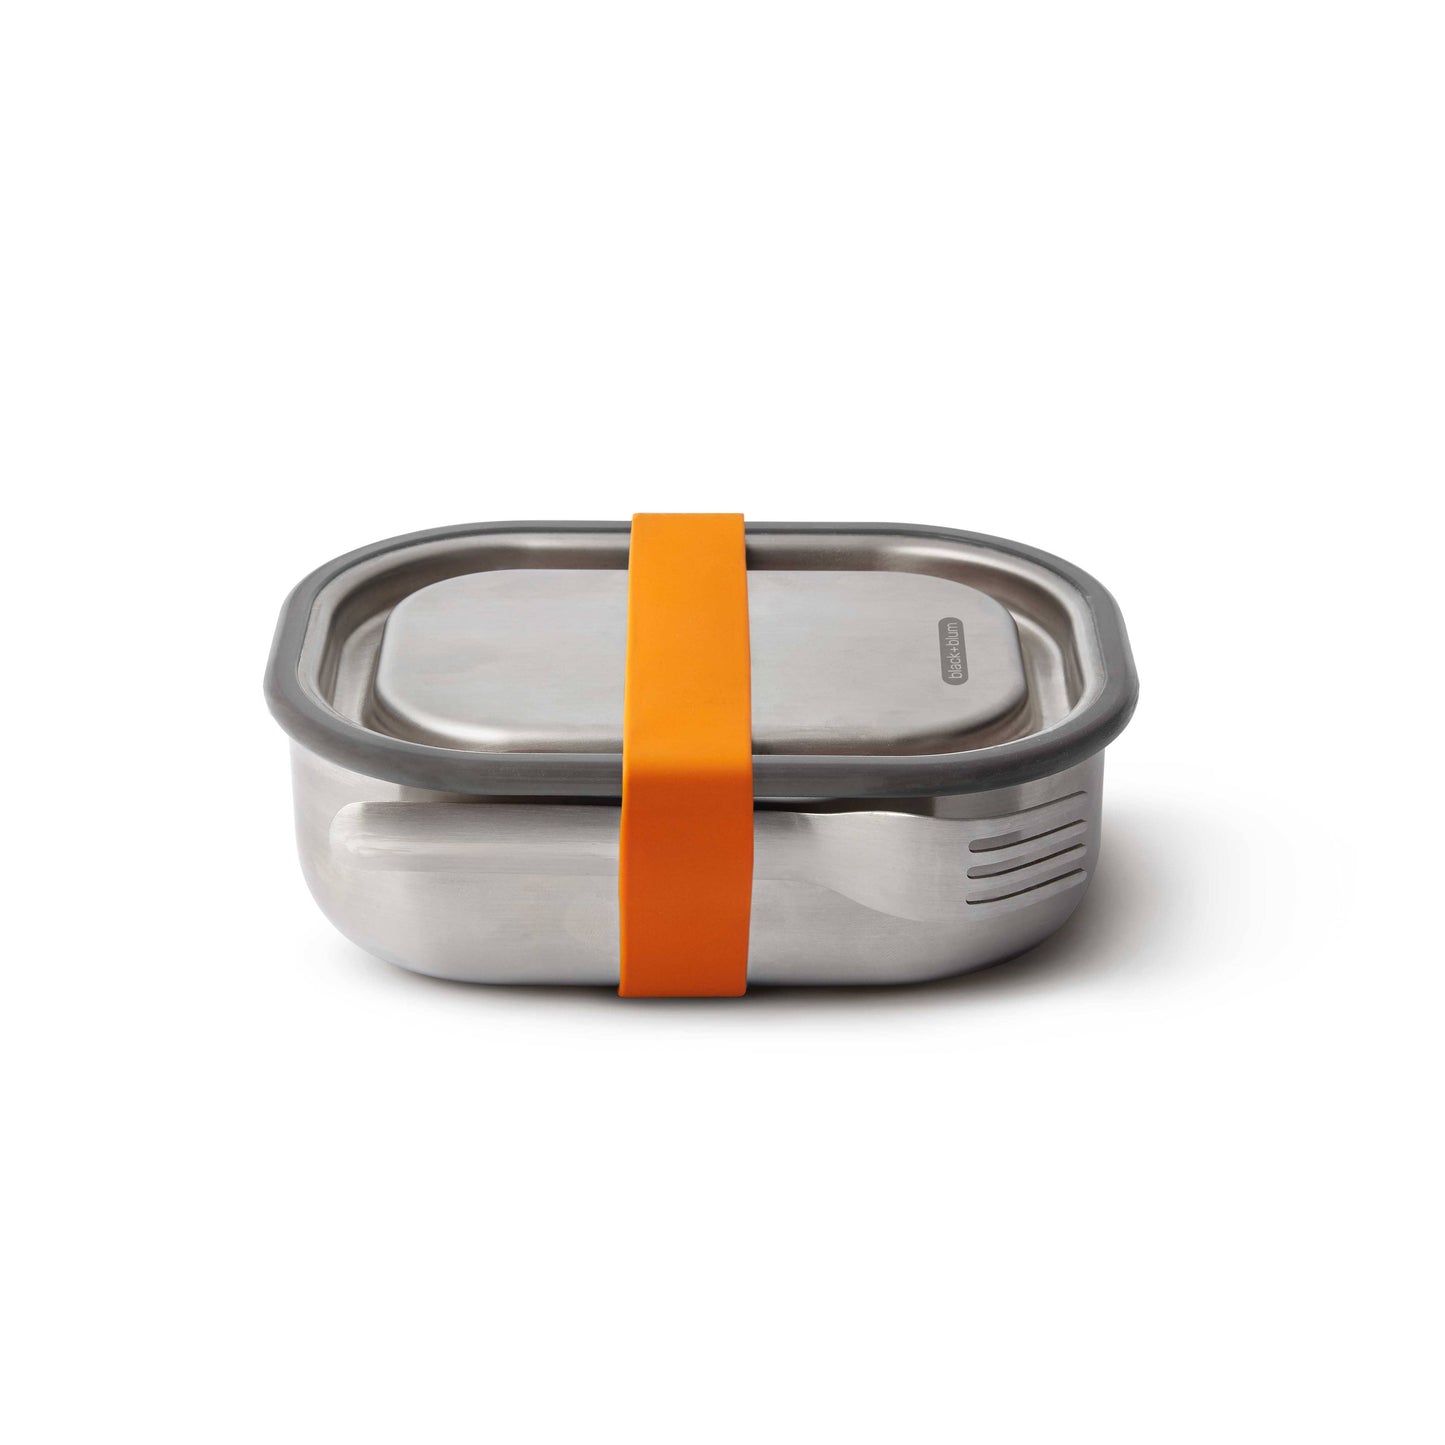 Black+Blum - Lunch Box - Leak Proof Stainless Steel Lunch Box: Orange